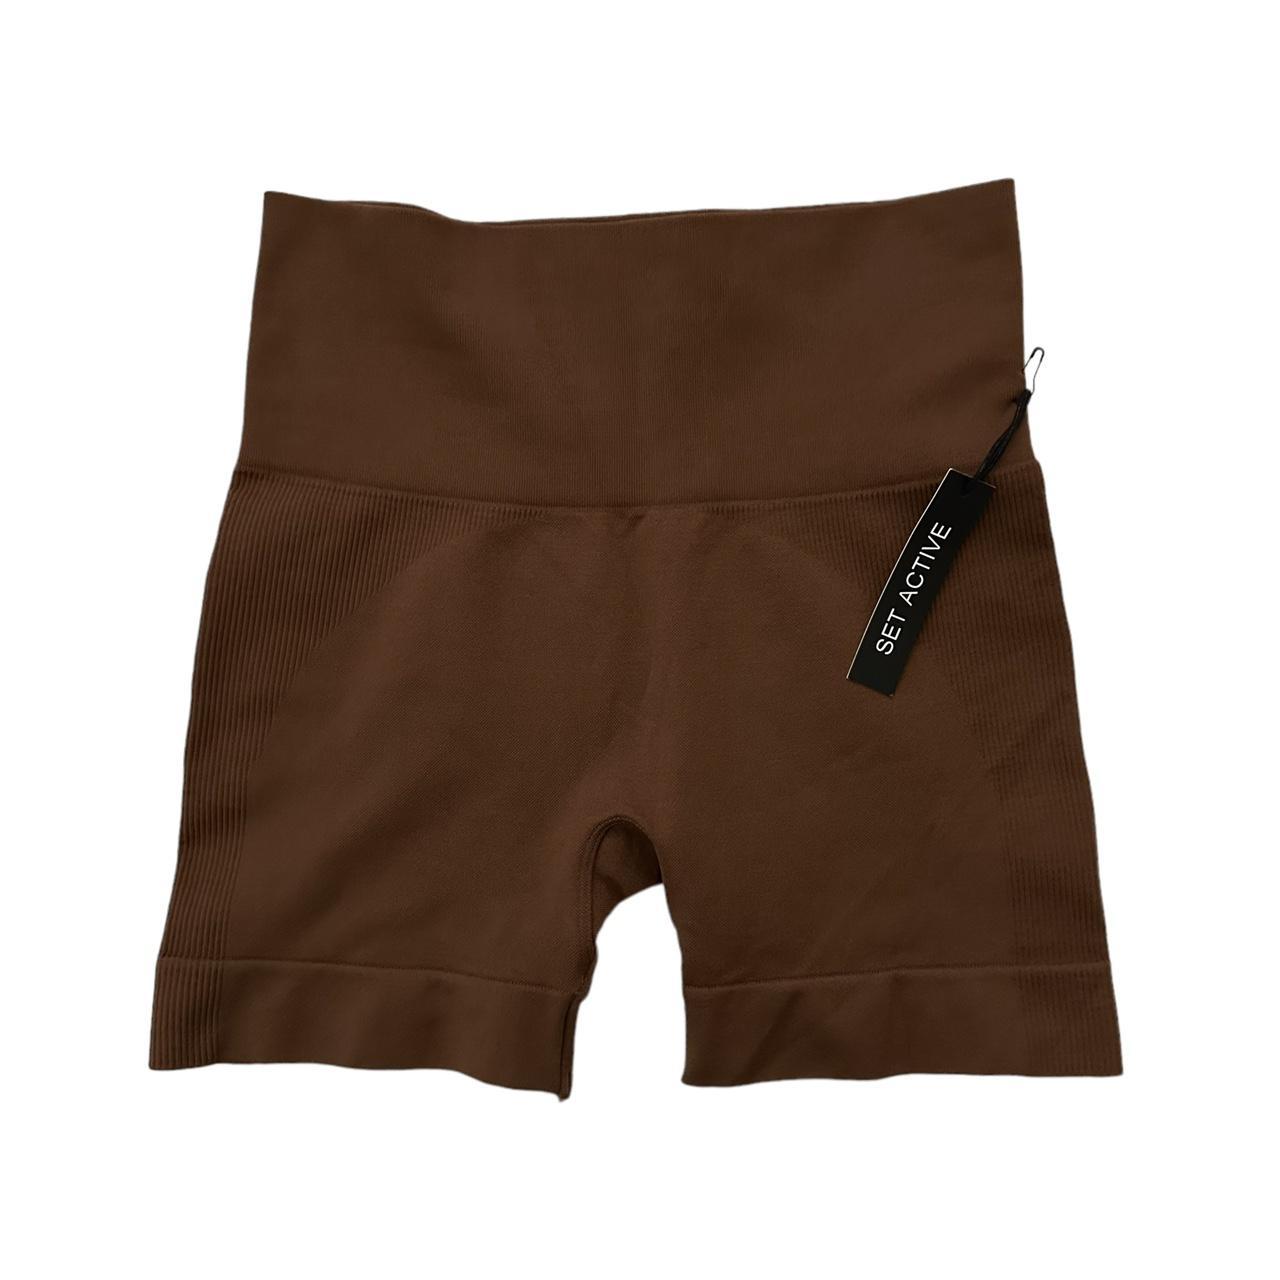 Product Image 1 - ♡‧₊˚set active biker shorts♡‧₊˚
🏷️ size